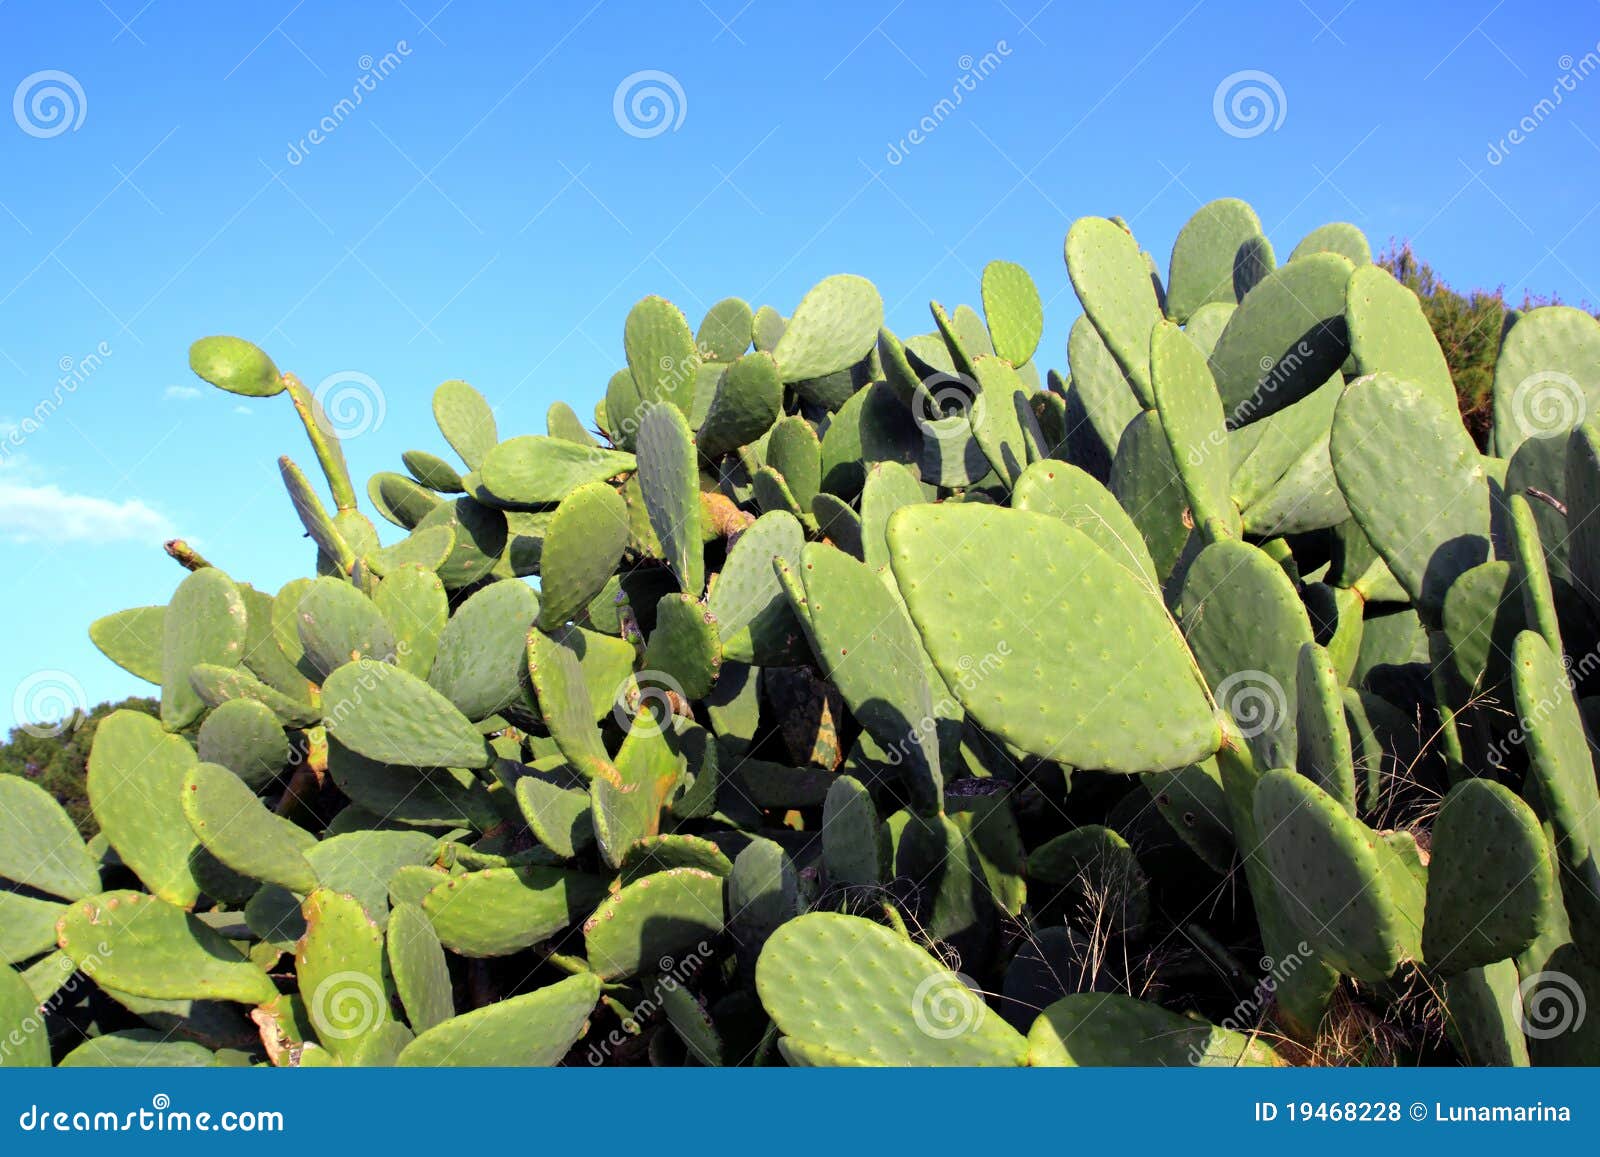 chumbera nopal cactus plant blue sky